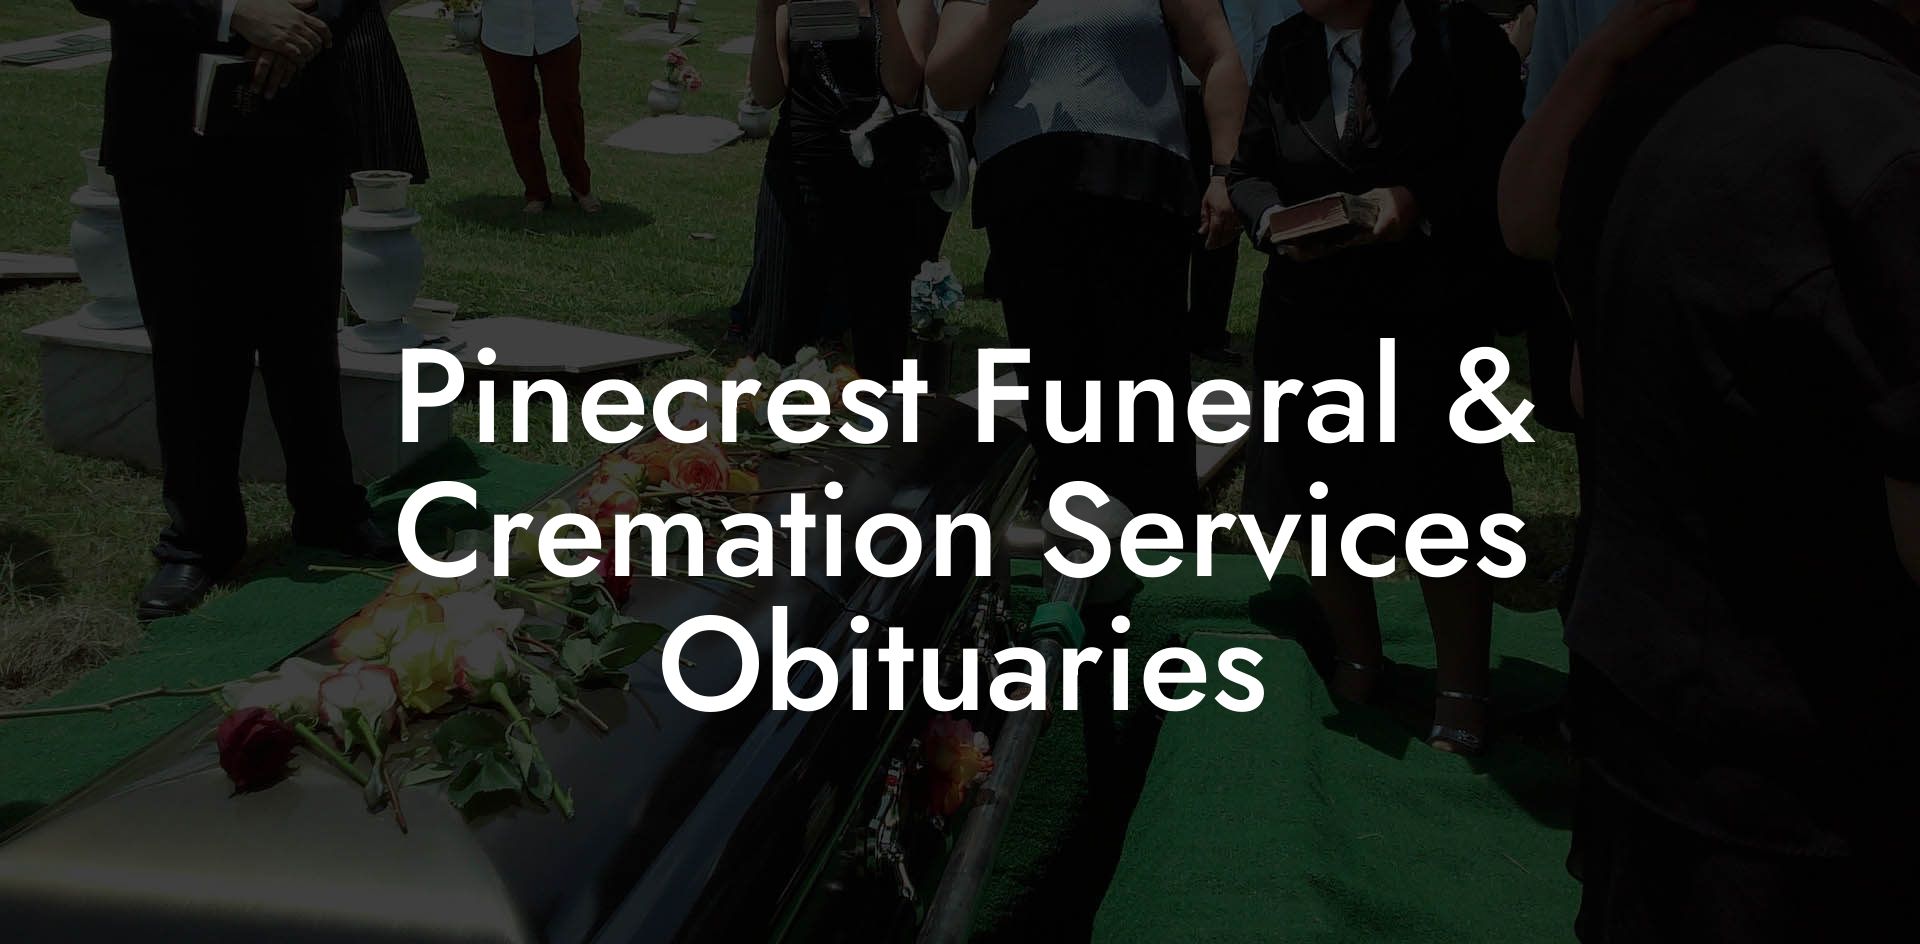 Pinecrest Funeral & Cremation Services Obituaries